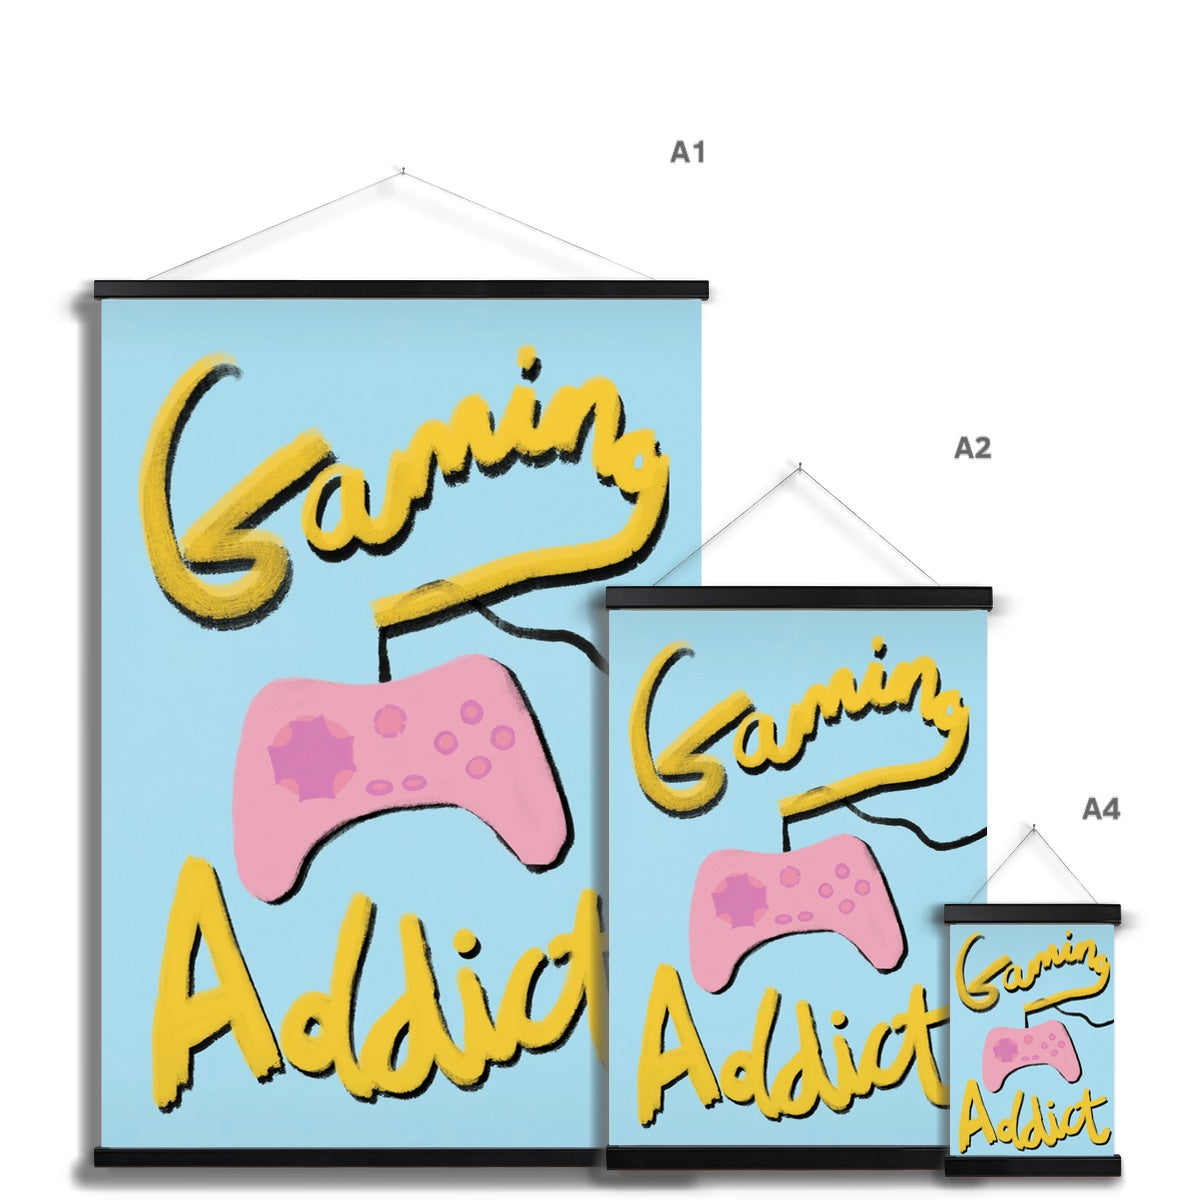 Gaming Addict Print - Light Blue, Yellow, Pink Fine Art Print with Hanger